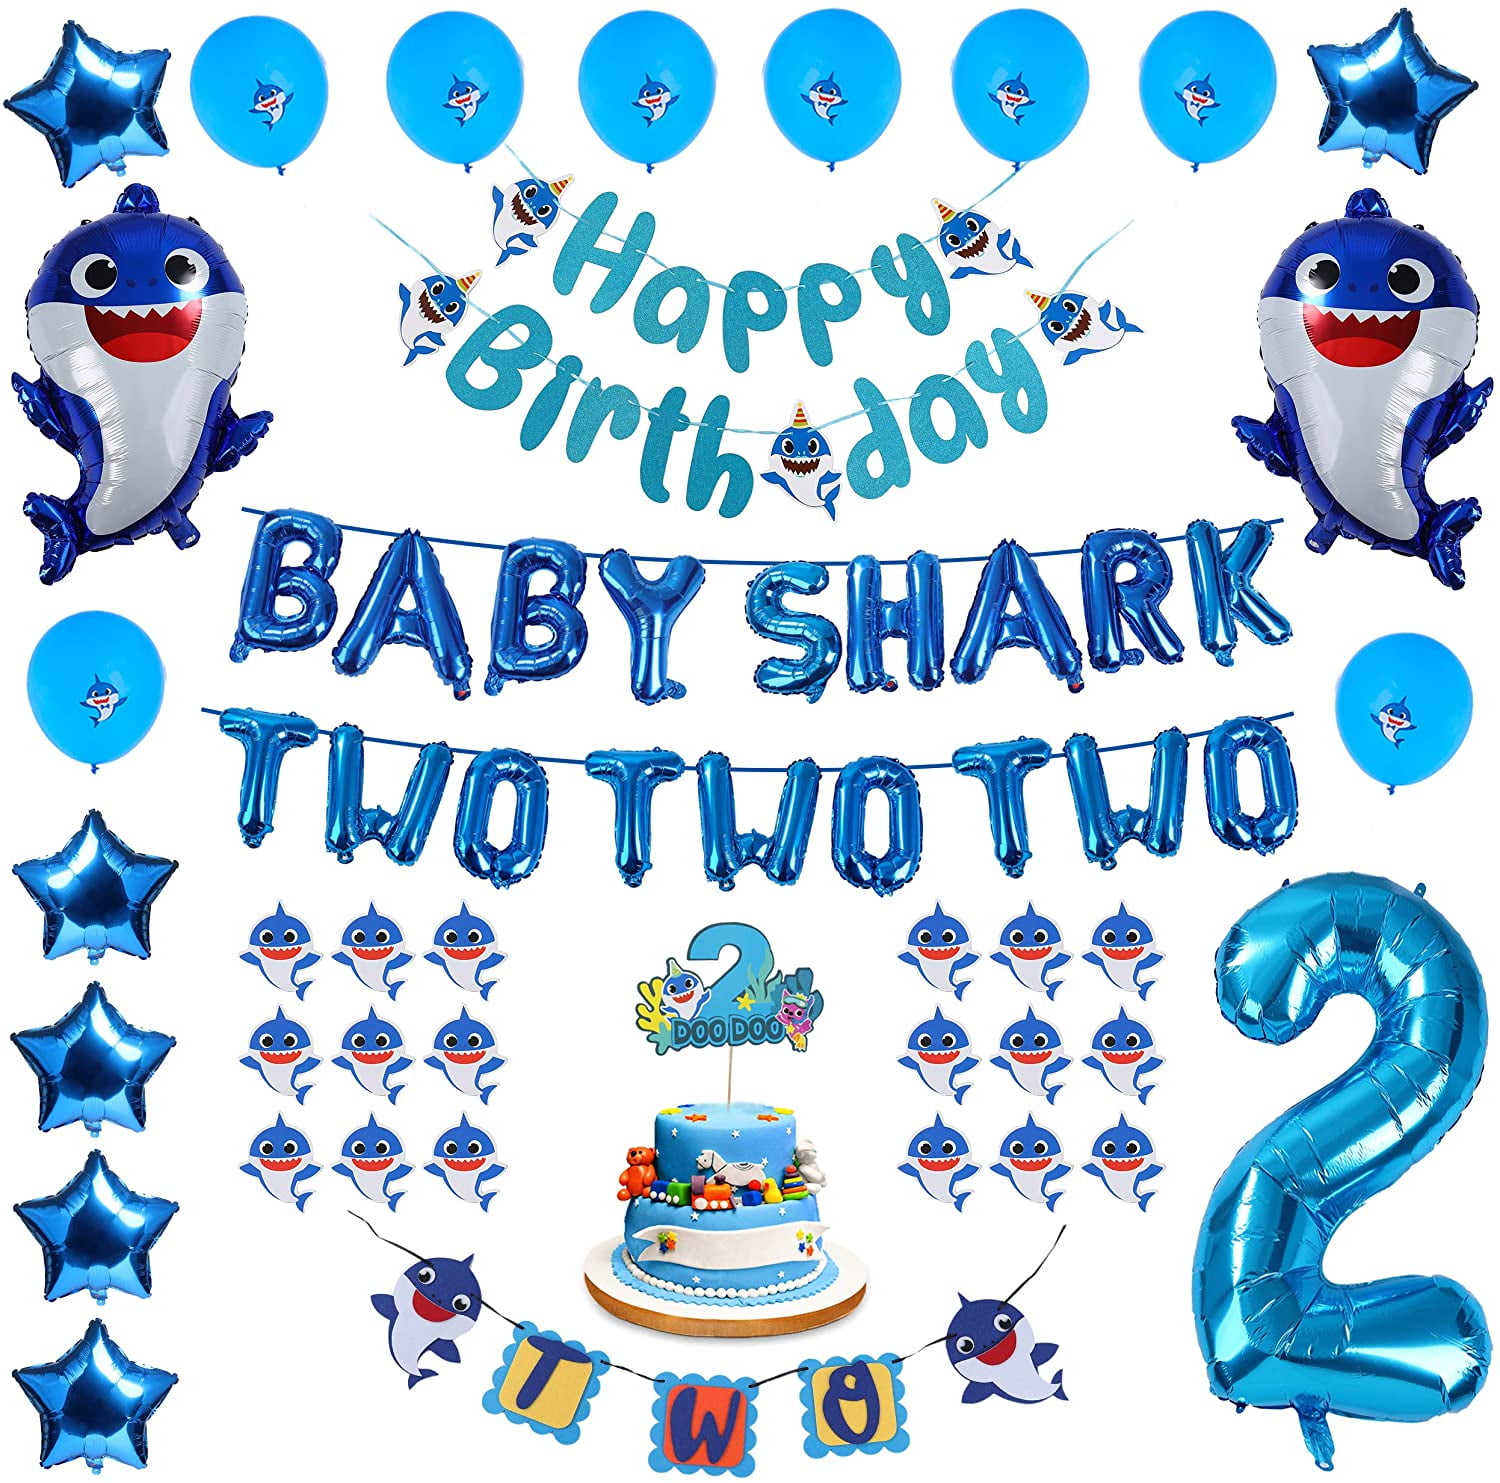 Pink Baby Shark Birthday Party Invitations Printed Set of 10